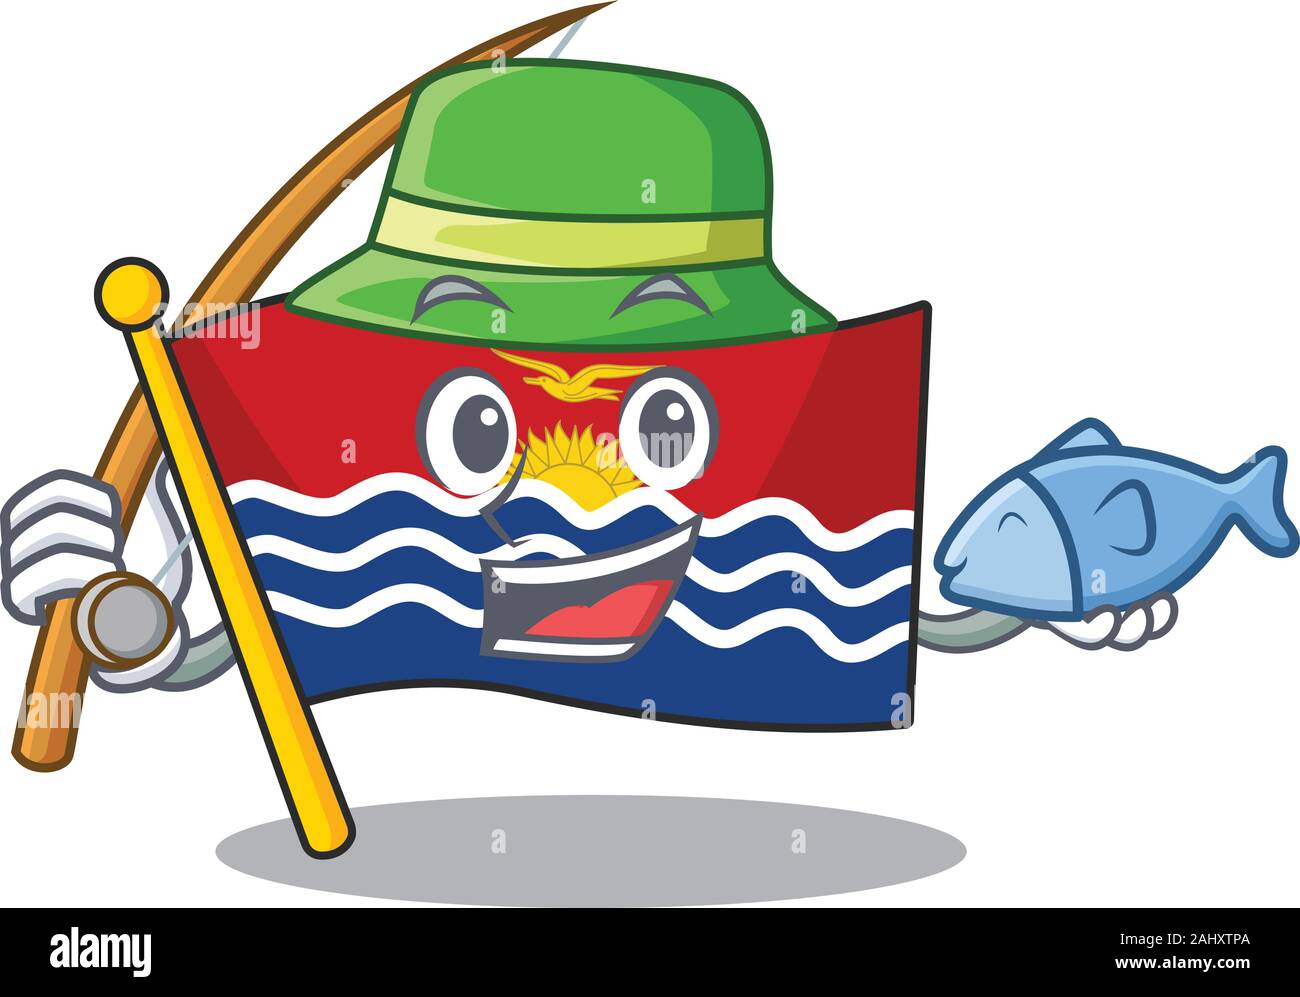 https://c8.alamy.com/comp/2AHXTPA/a-picture-of-funny-fishing-flag-kiribati-scroll-design-2AHXTPA.jpg